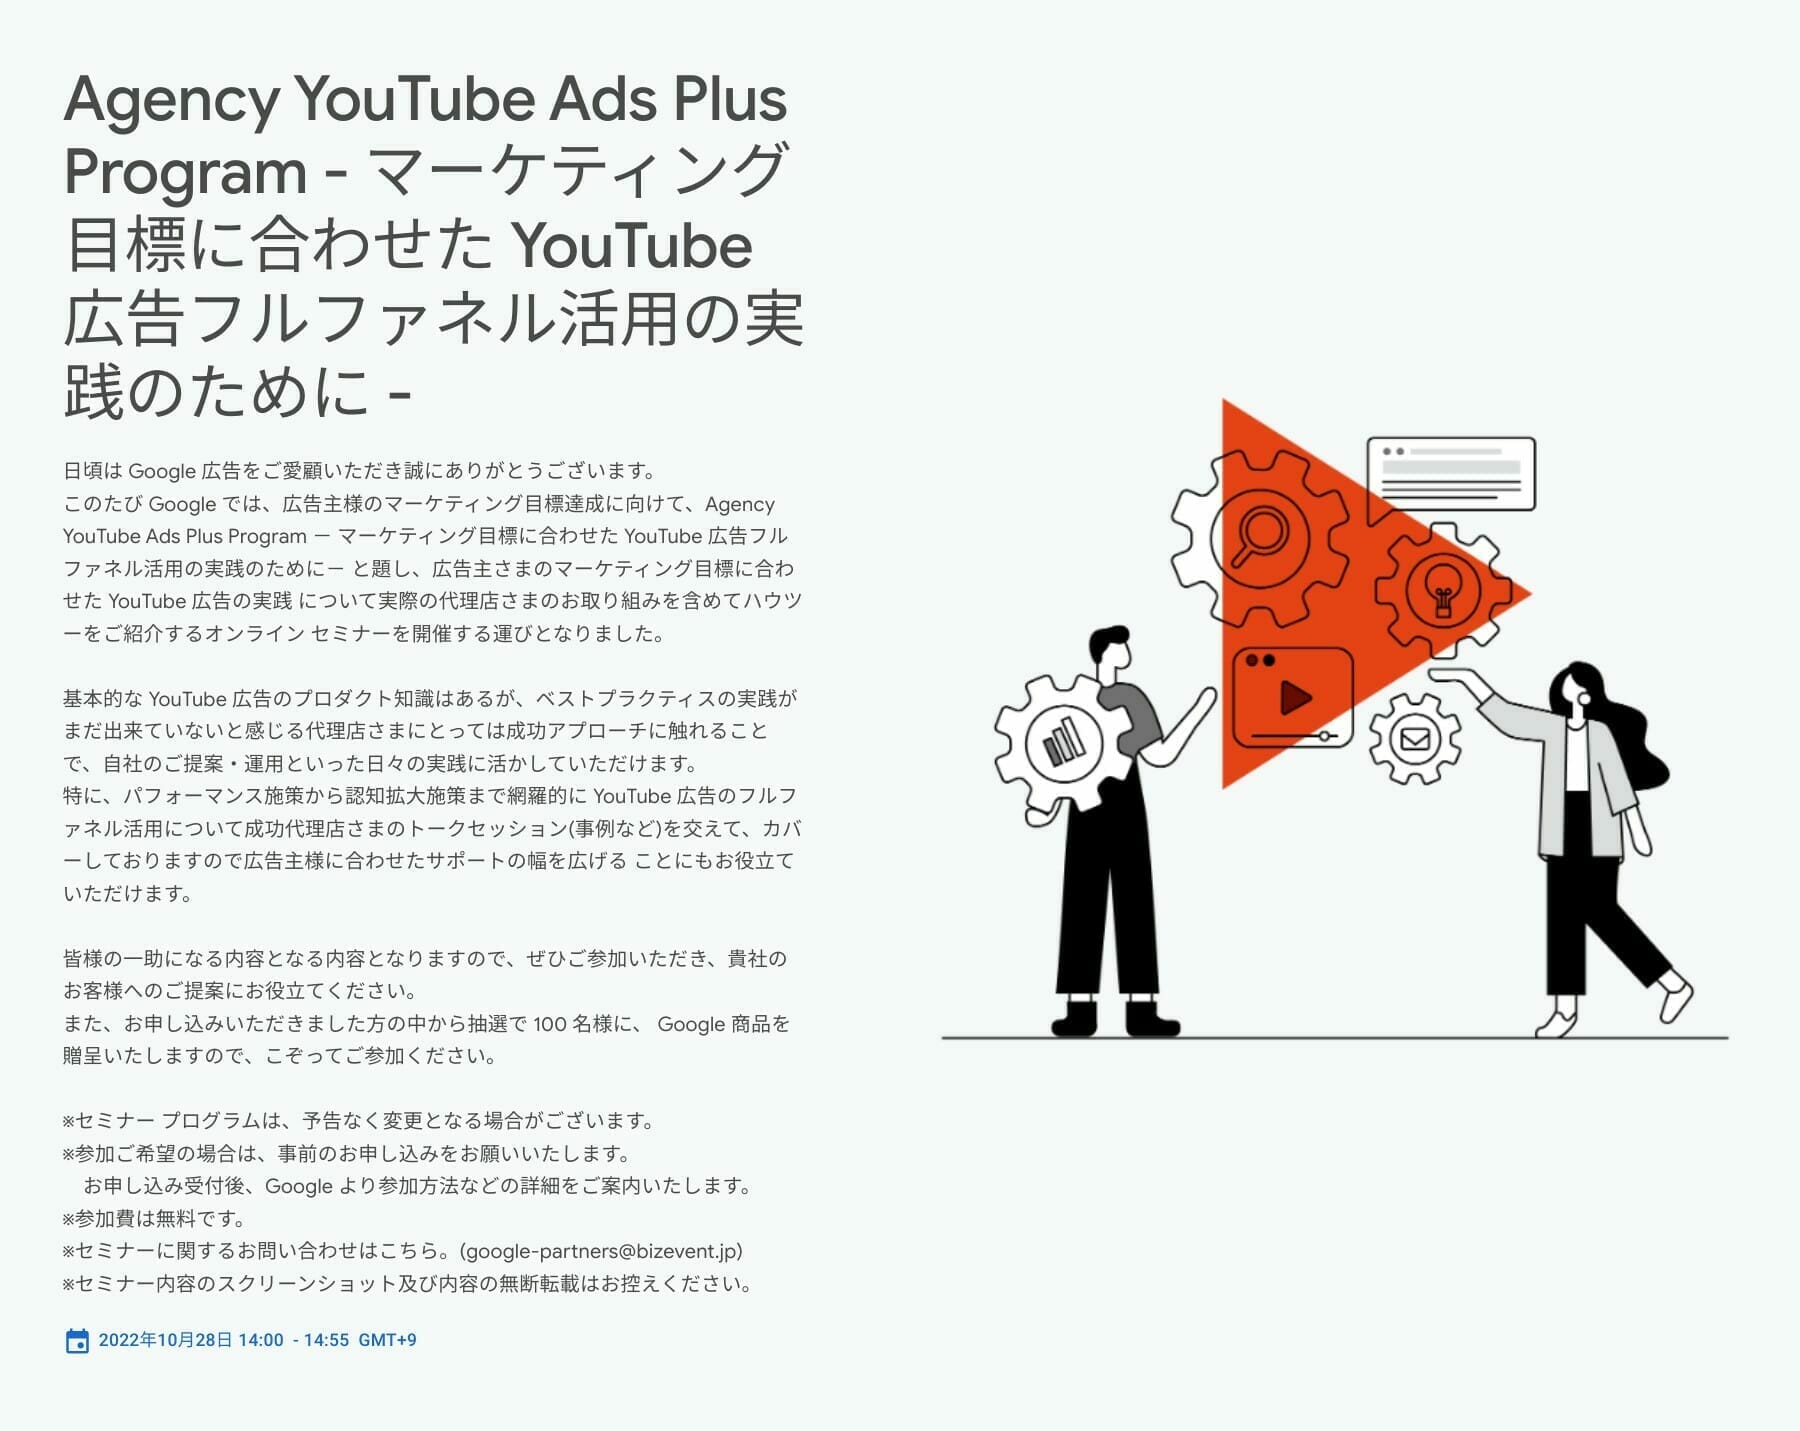 [Google Ads] Agency YouTube Ads Plus Program - マーケティング目標に合わせた YouTube 広告フルファネル活用の実践のために